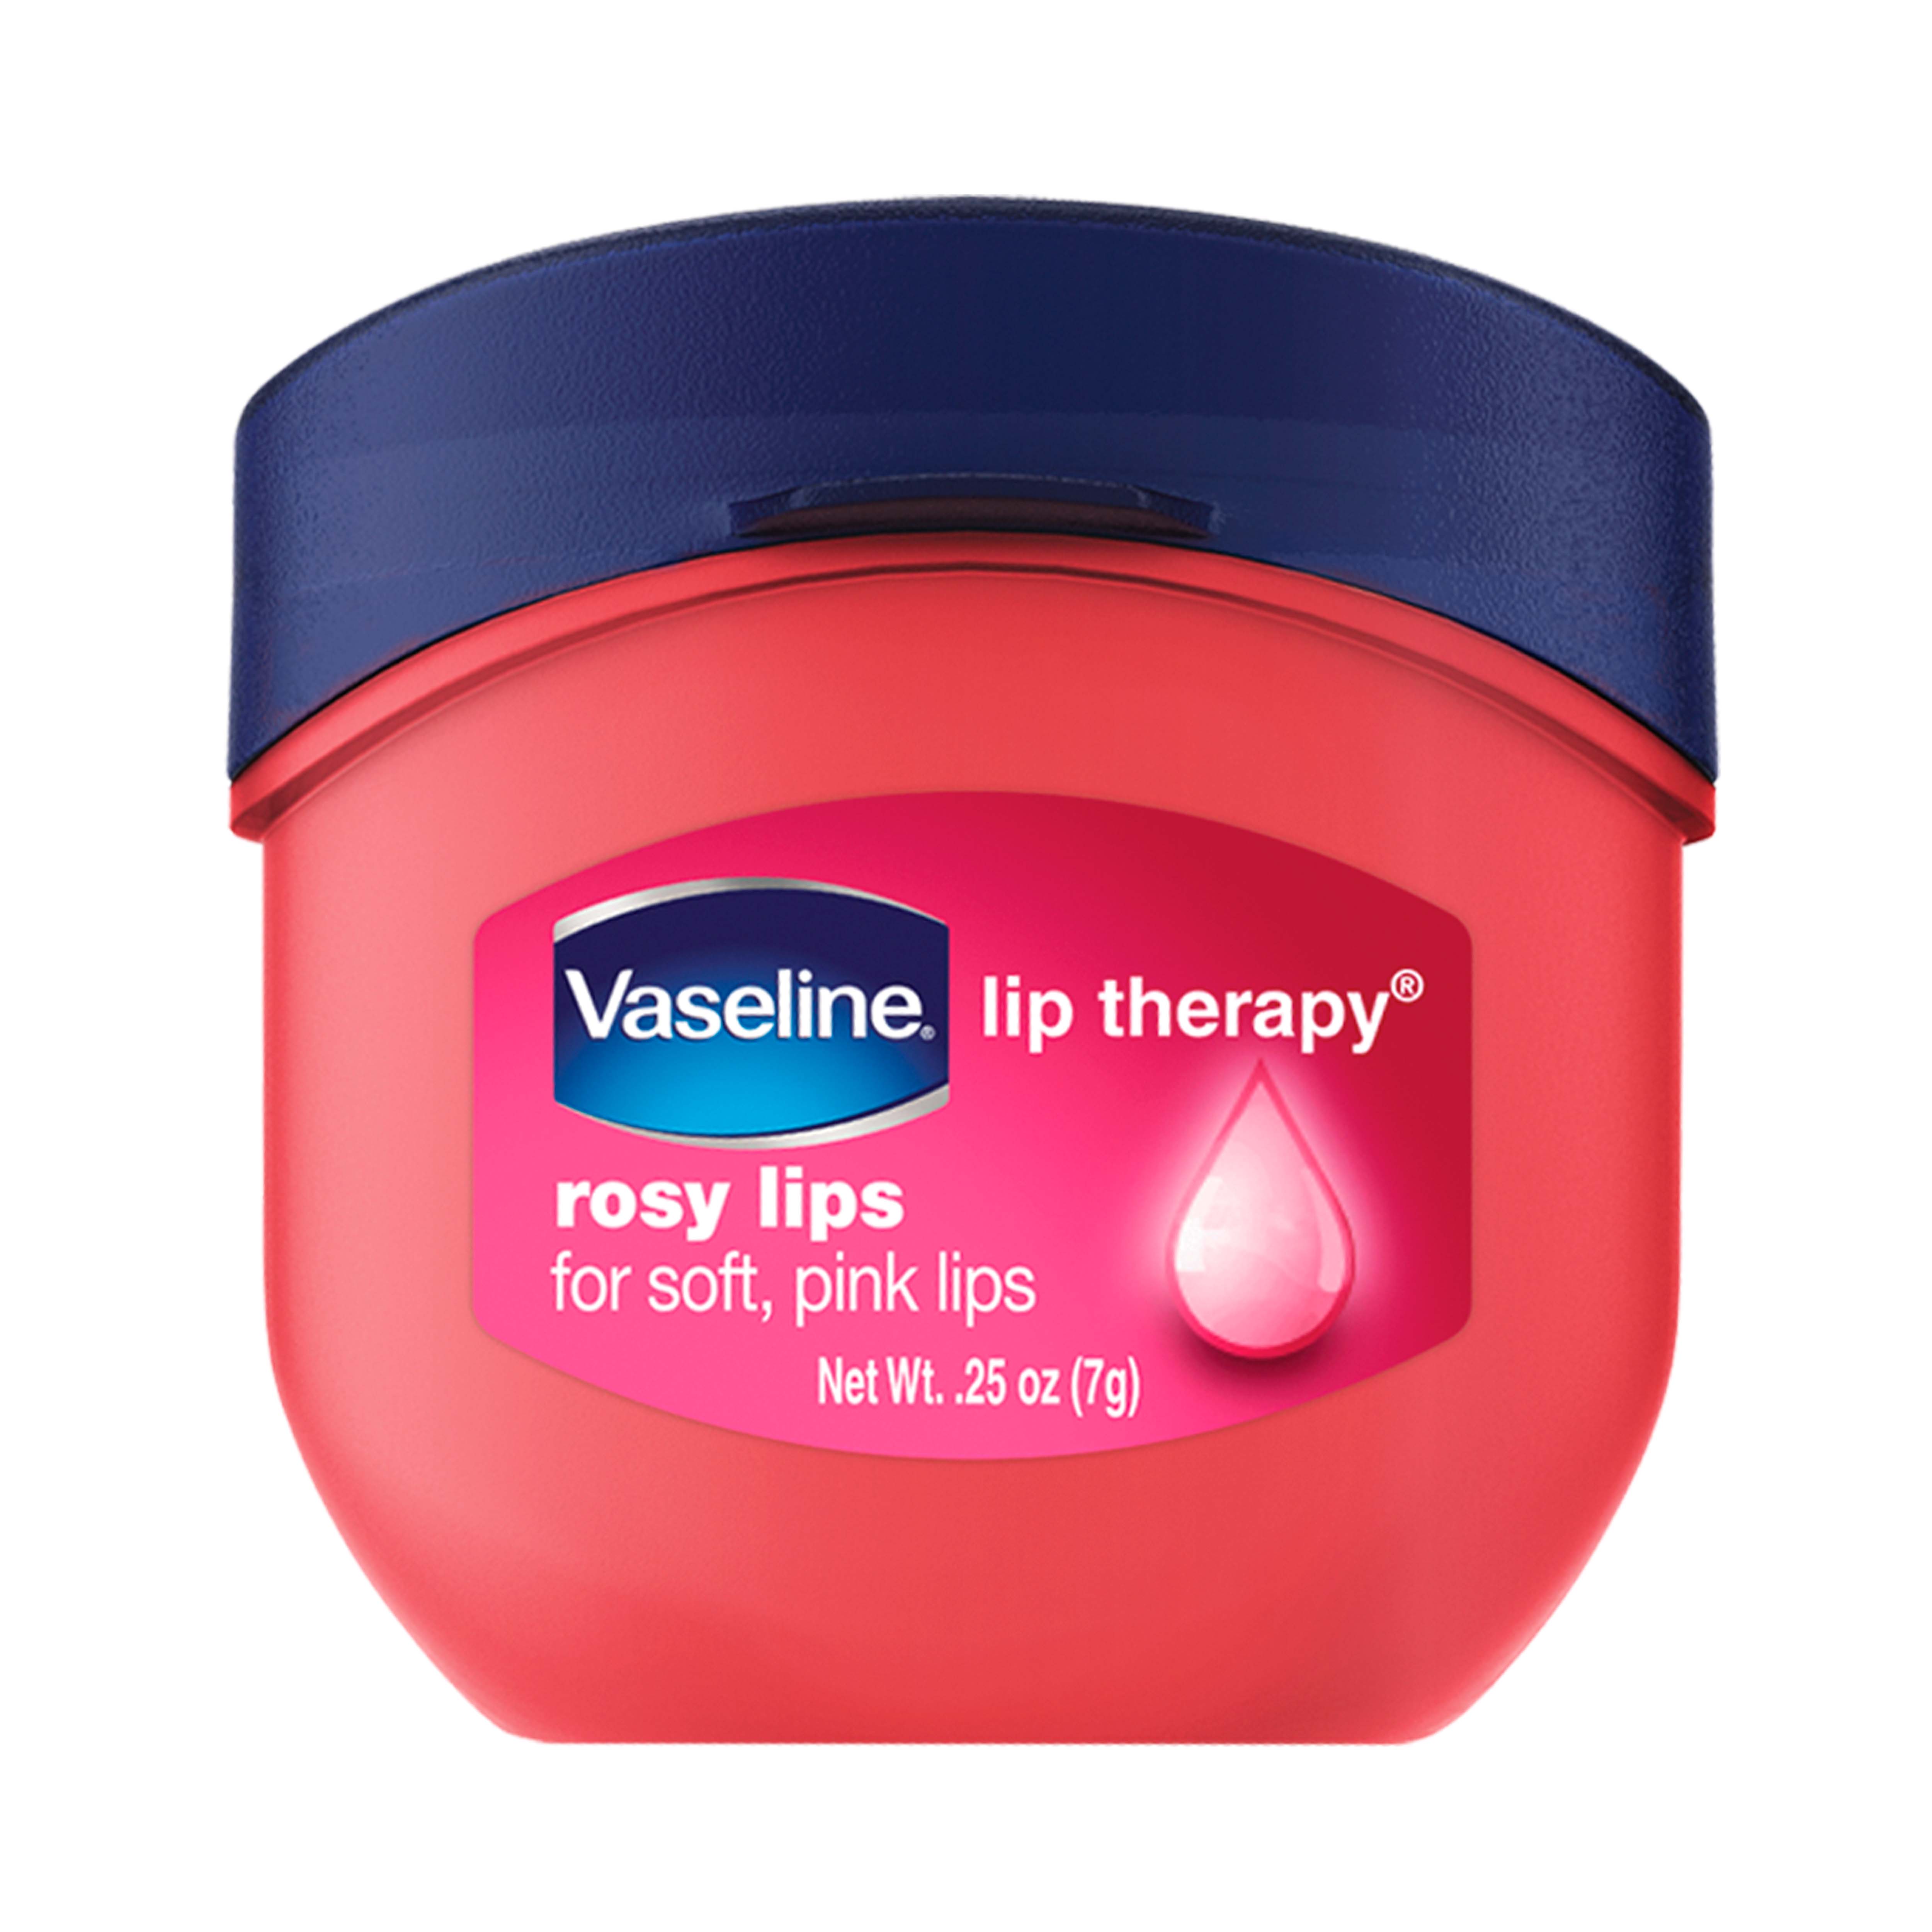 Vaseline Lip therapy mini jars